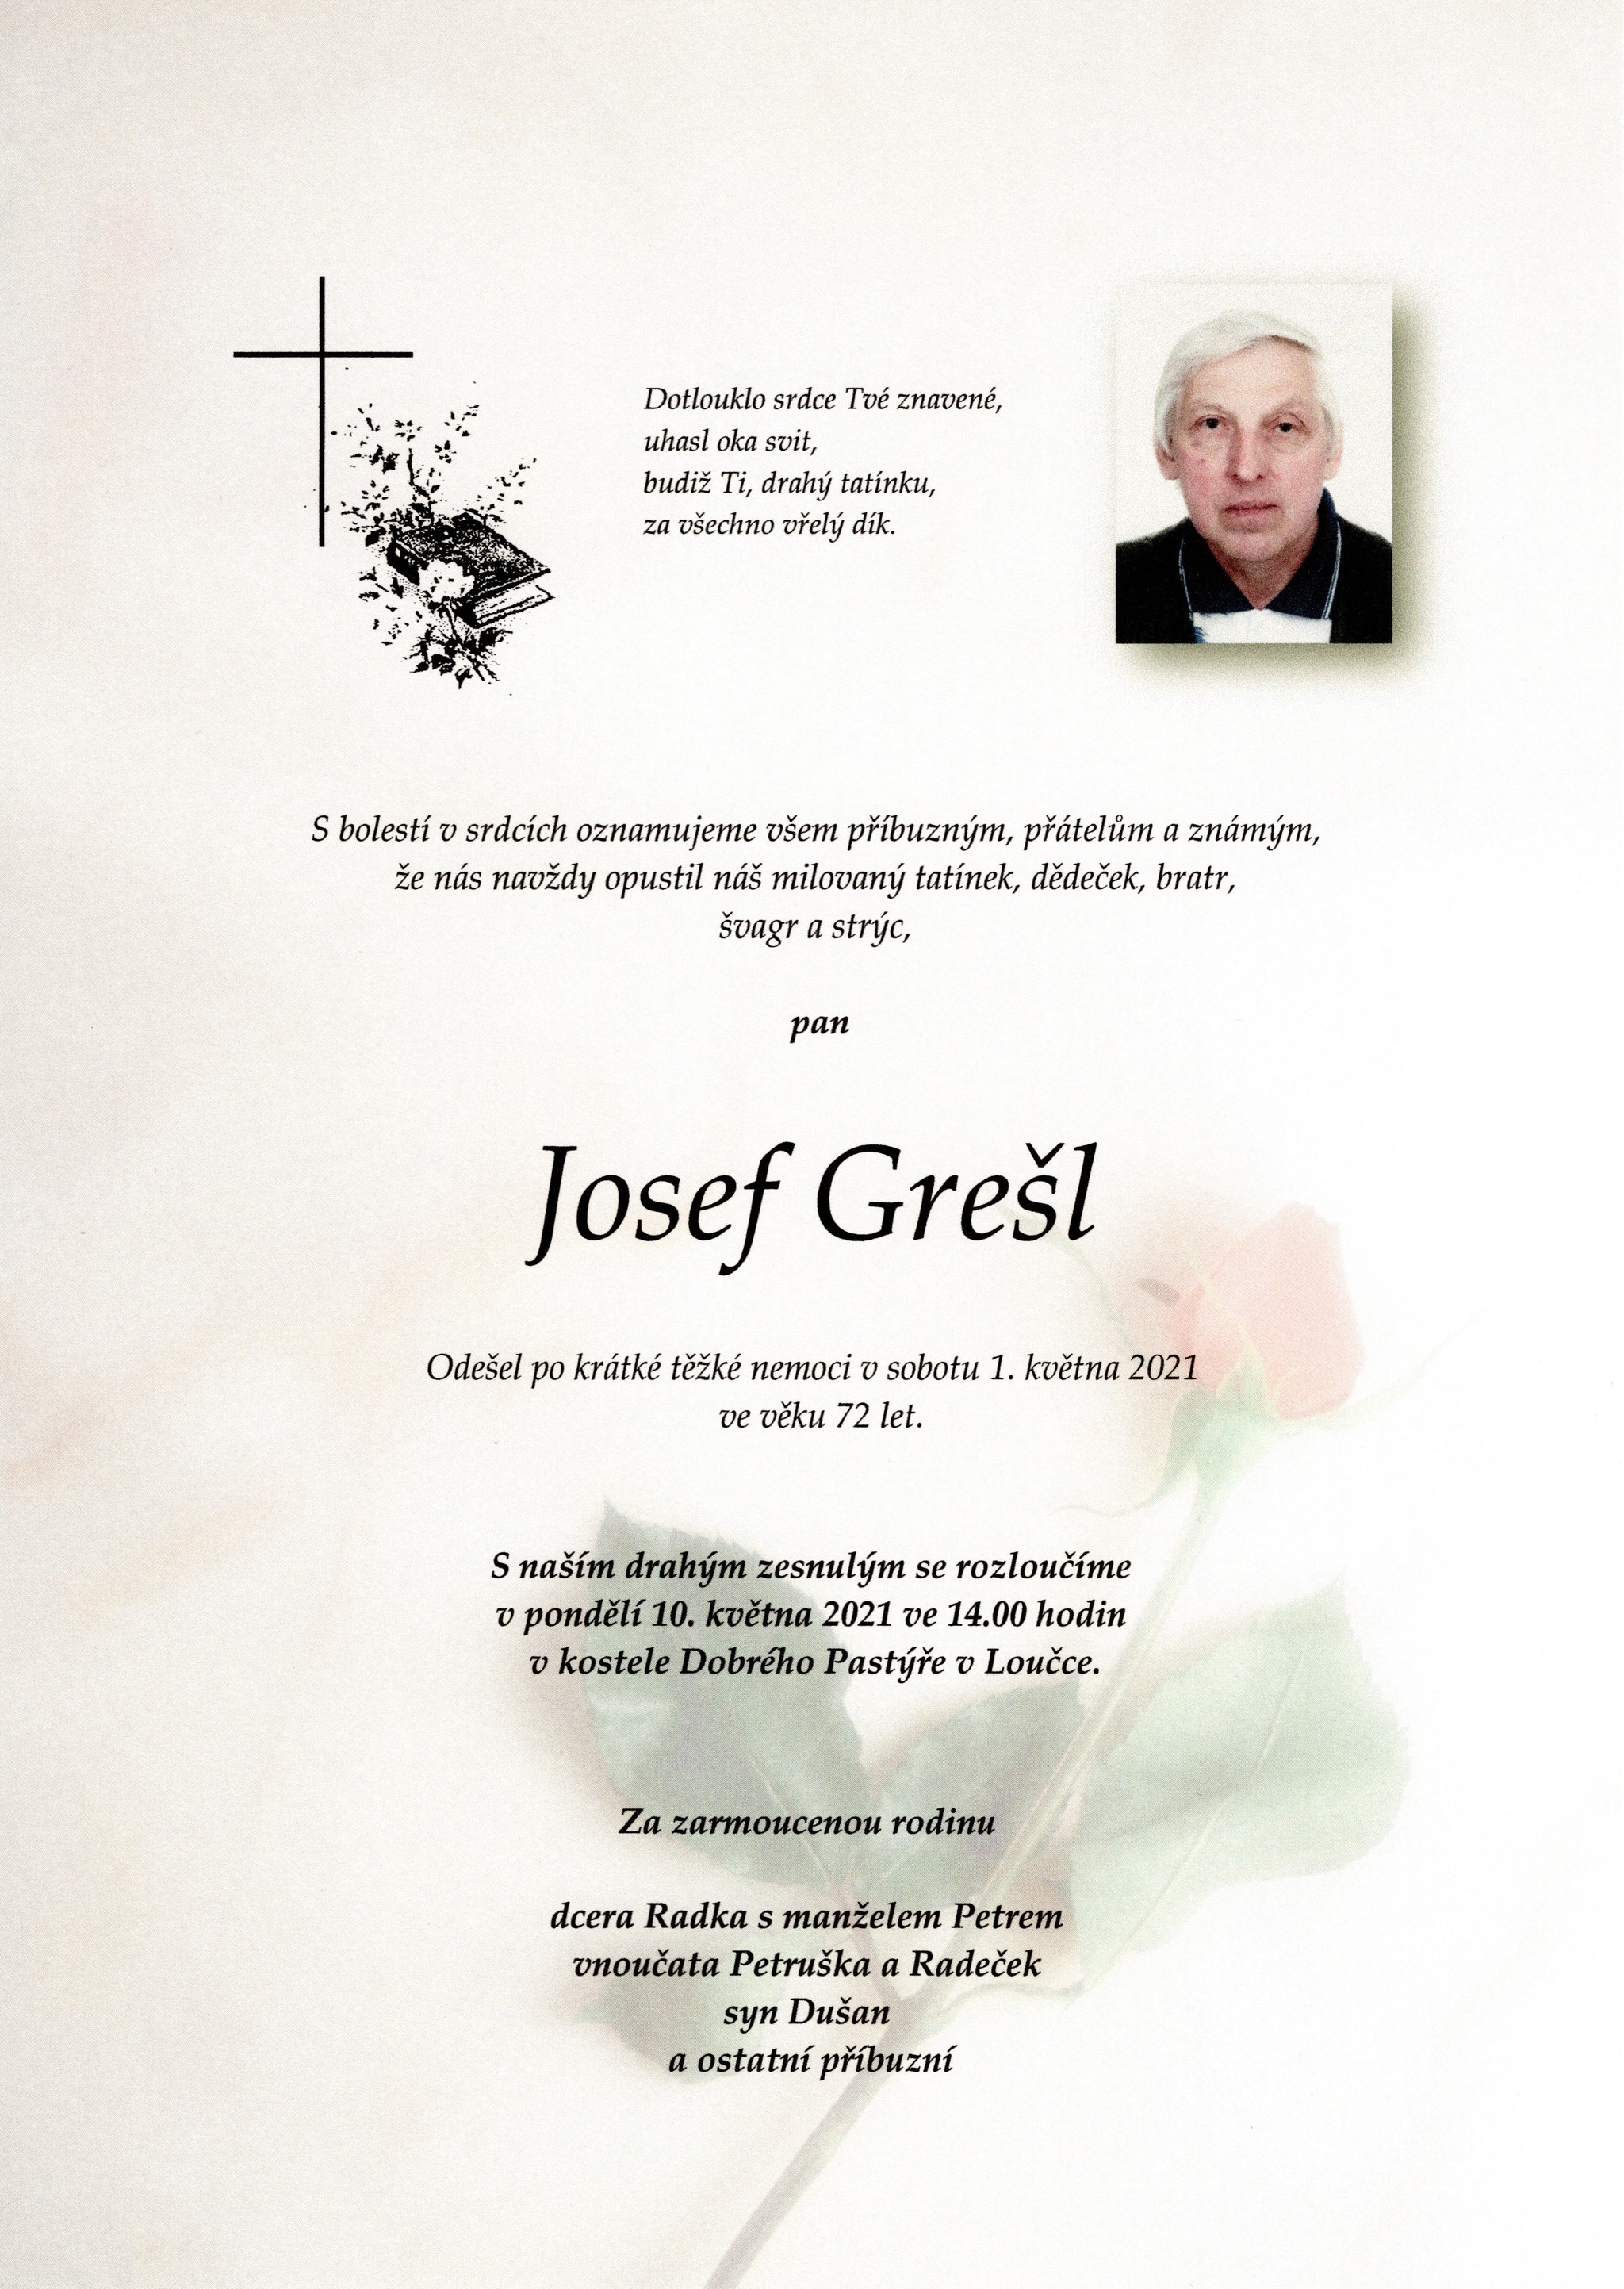 Josef Grešl